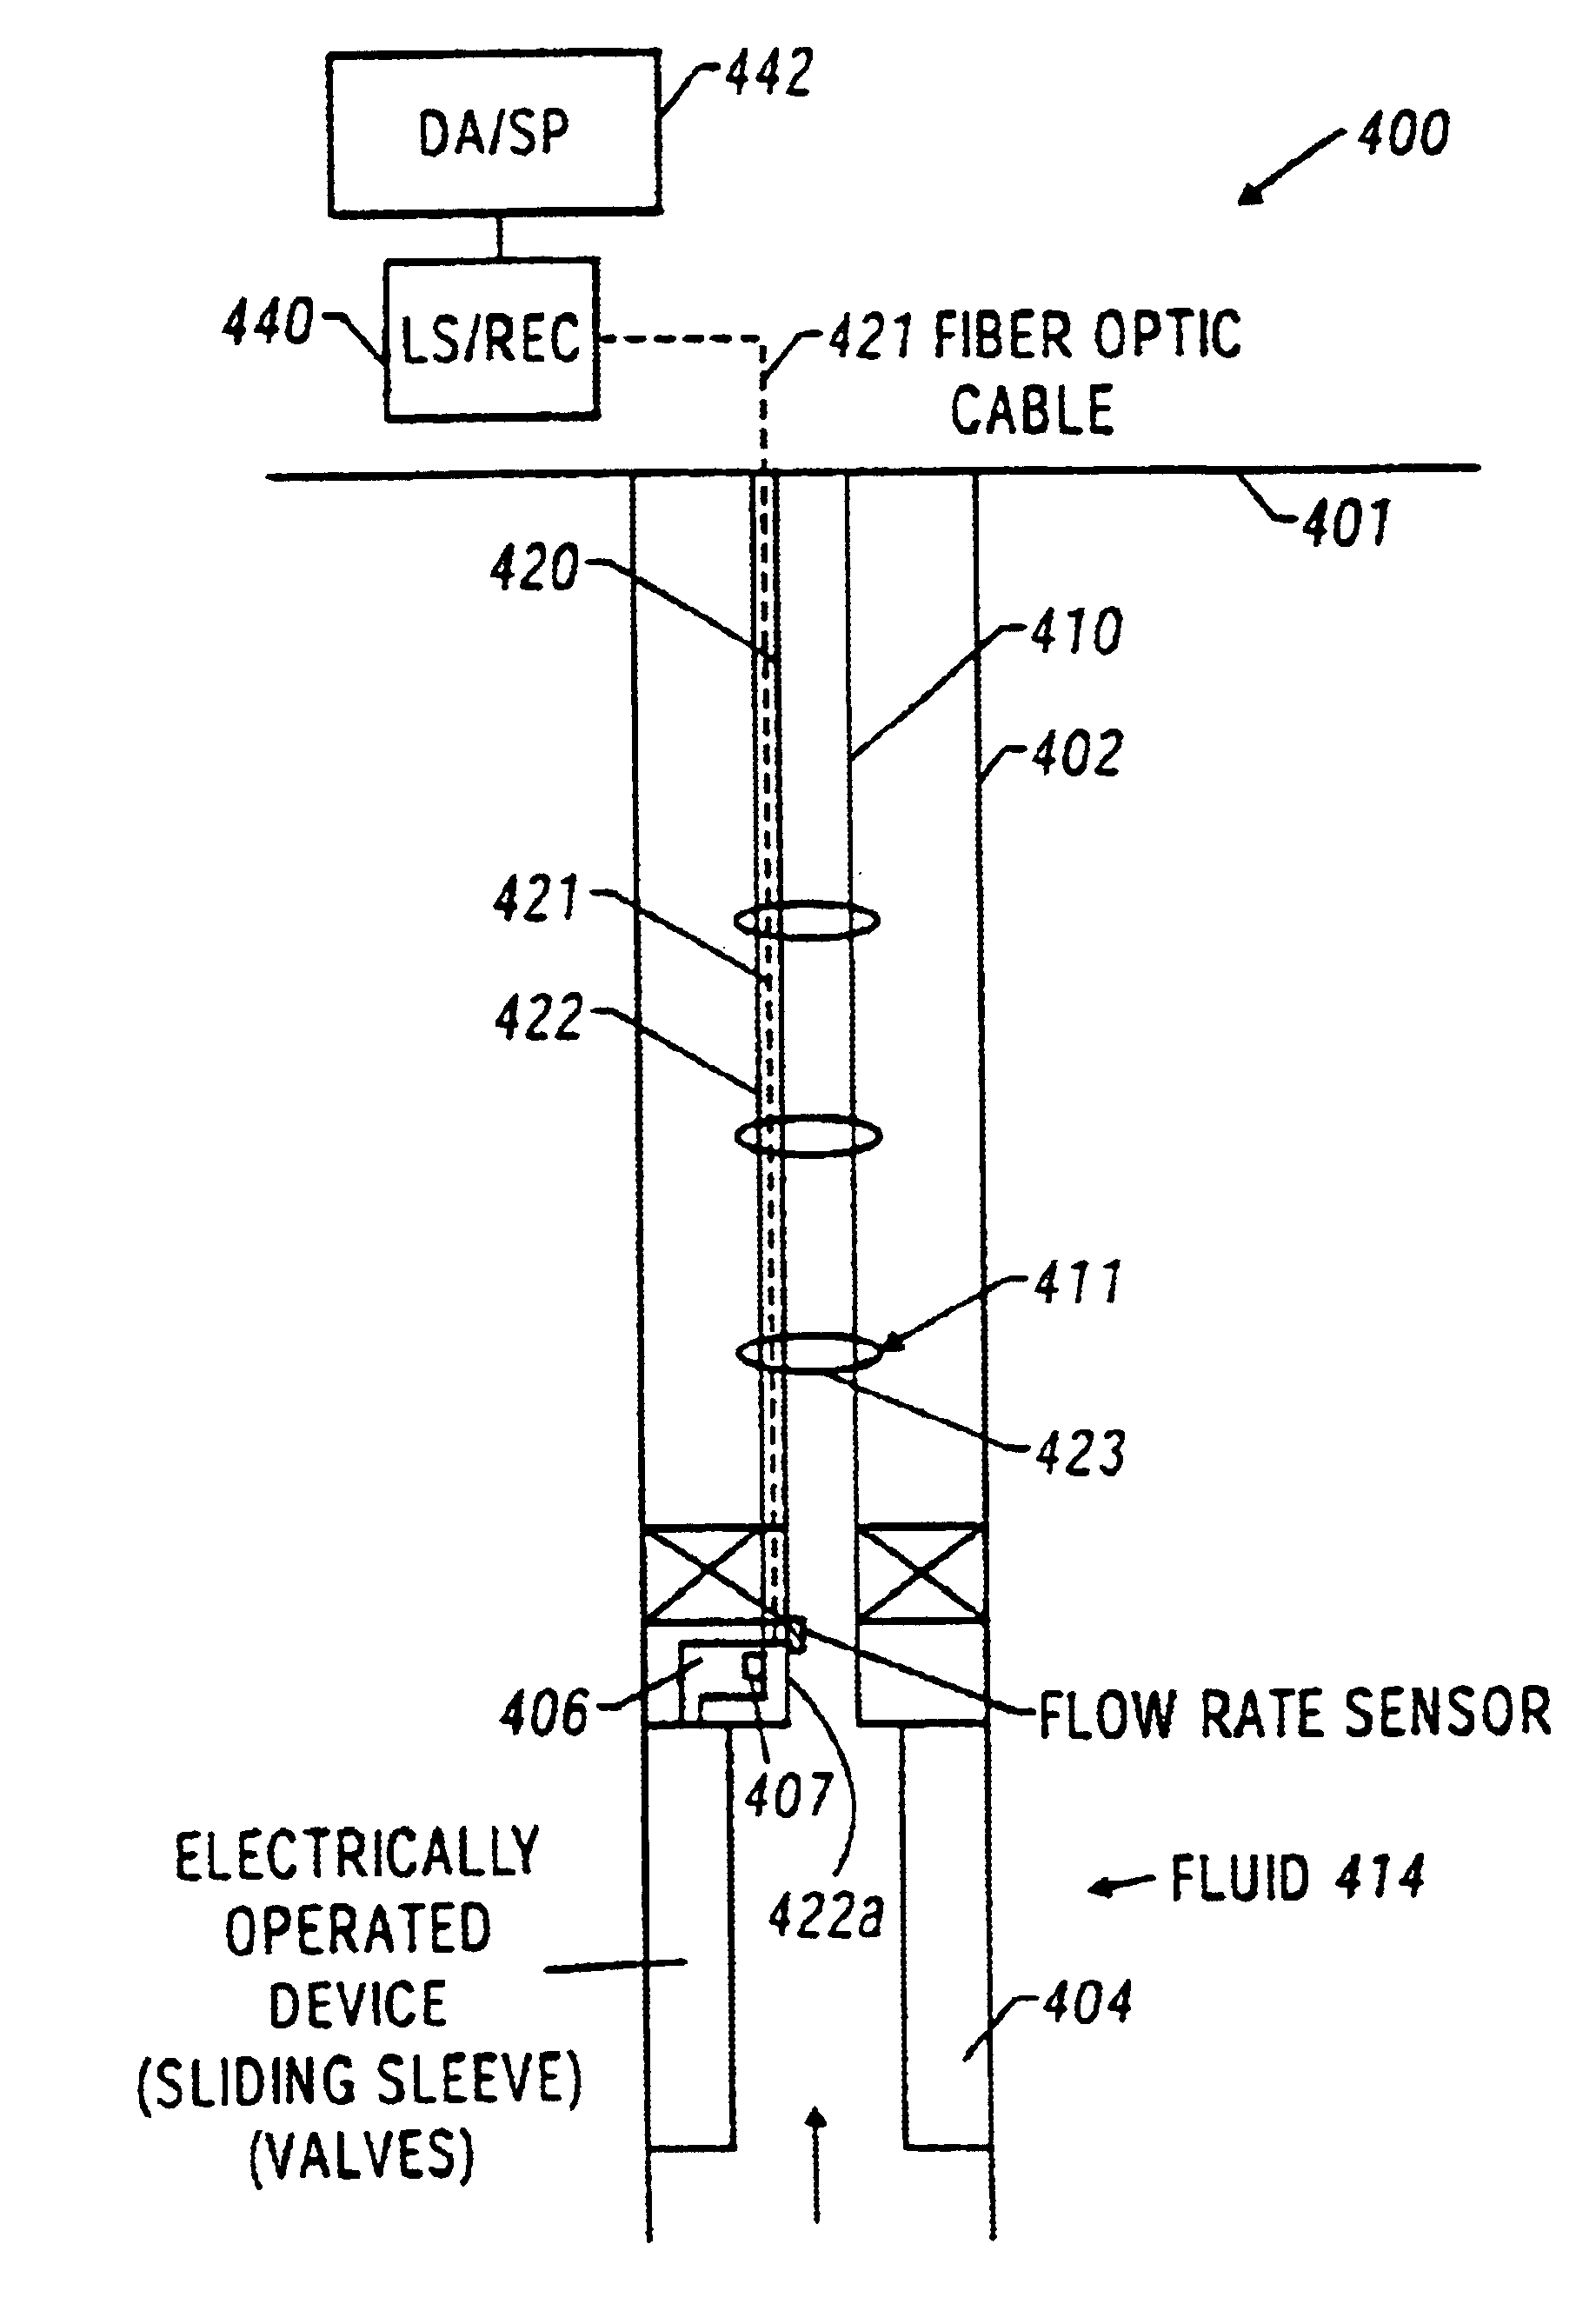 Method and apparatus of providing an optical fiber along a power supply line